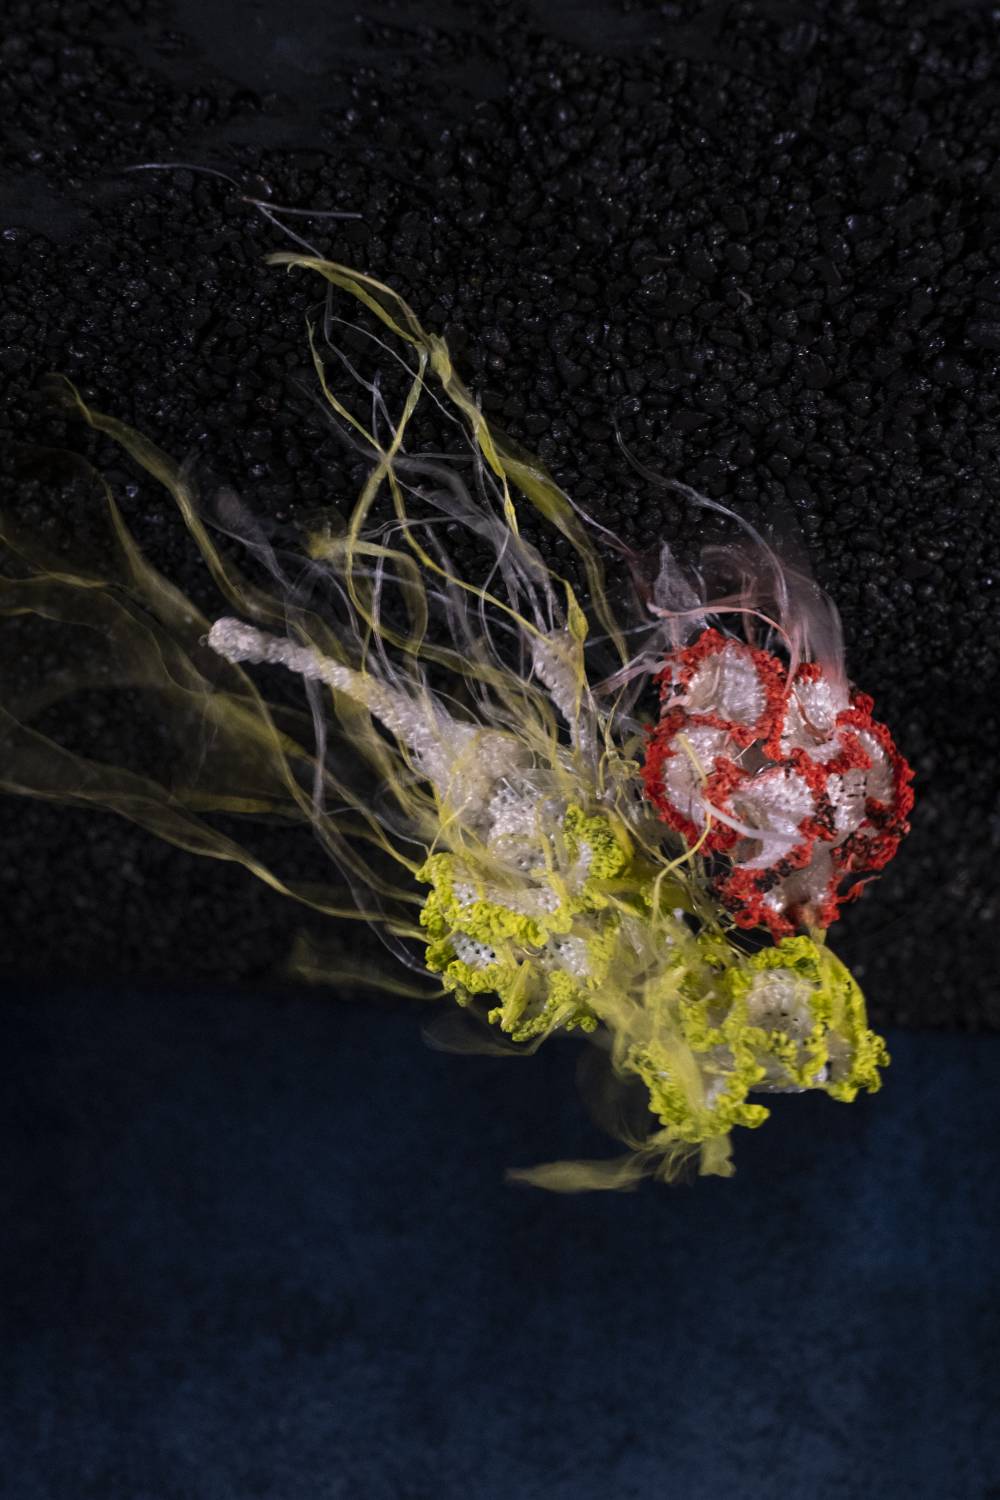 Crochet jellyfish made of plastic bags